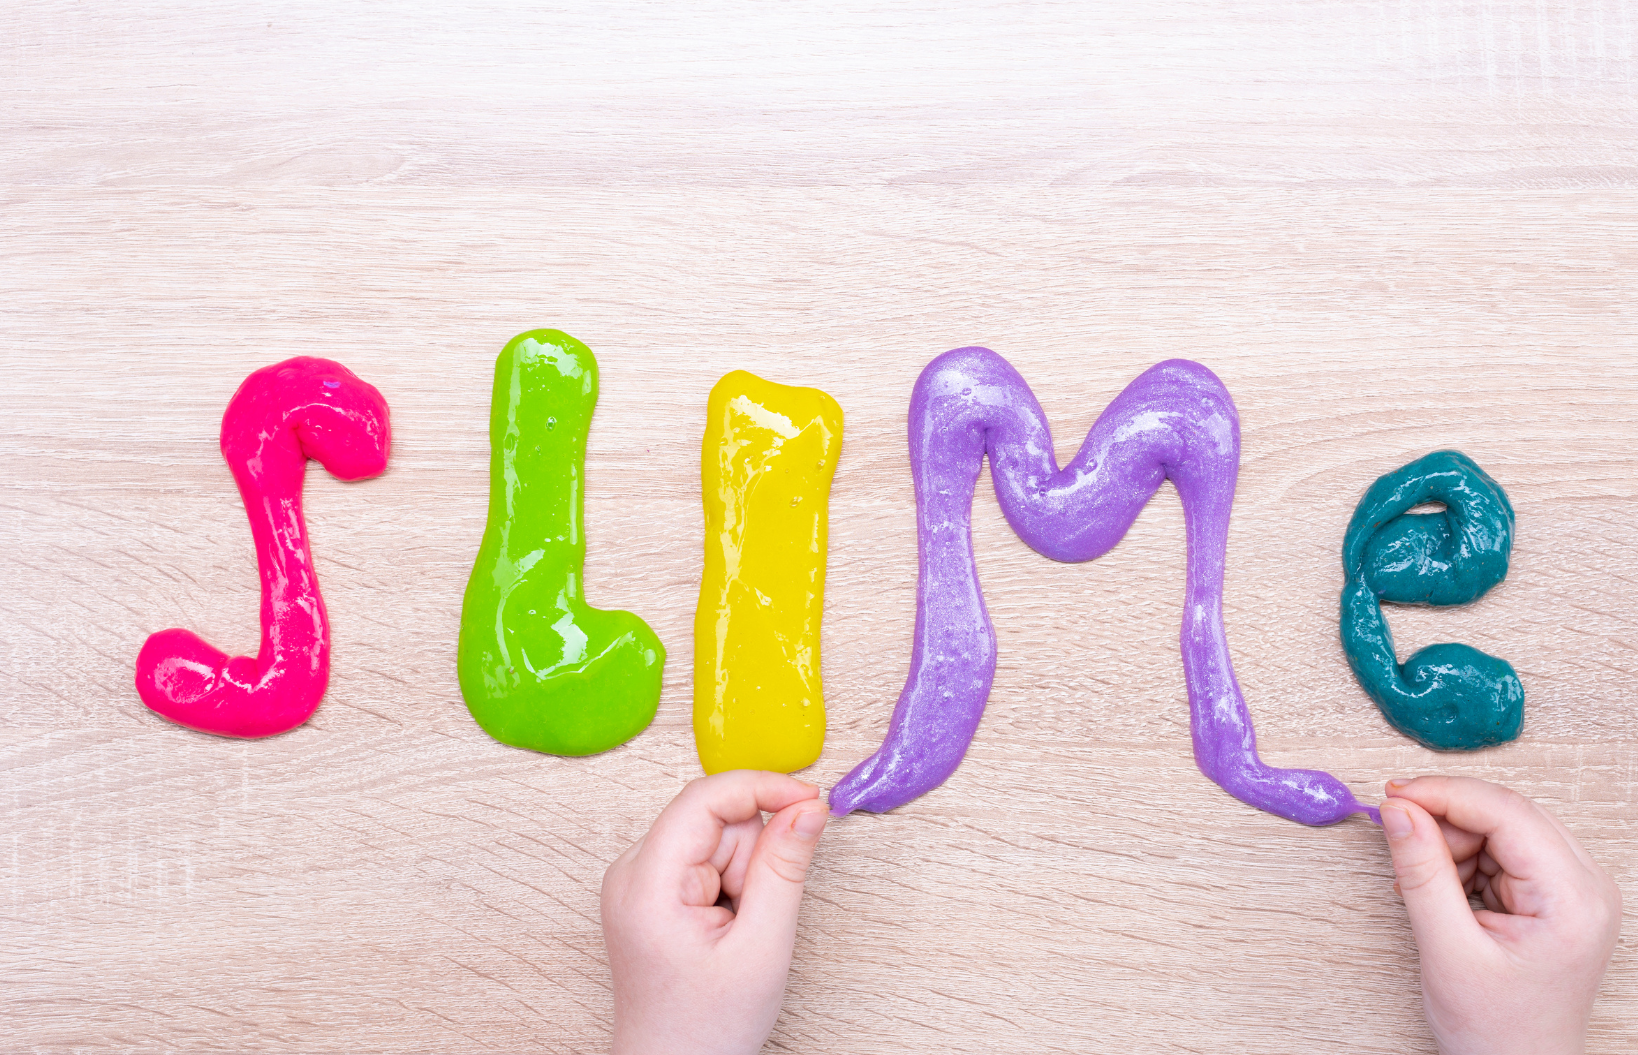 Slime spelling "slime".